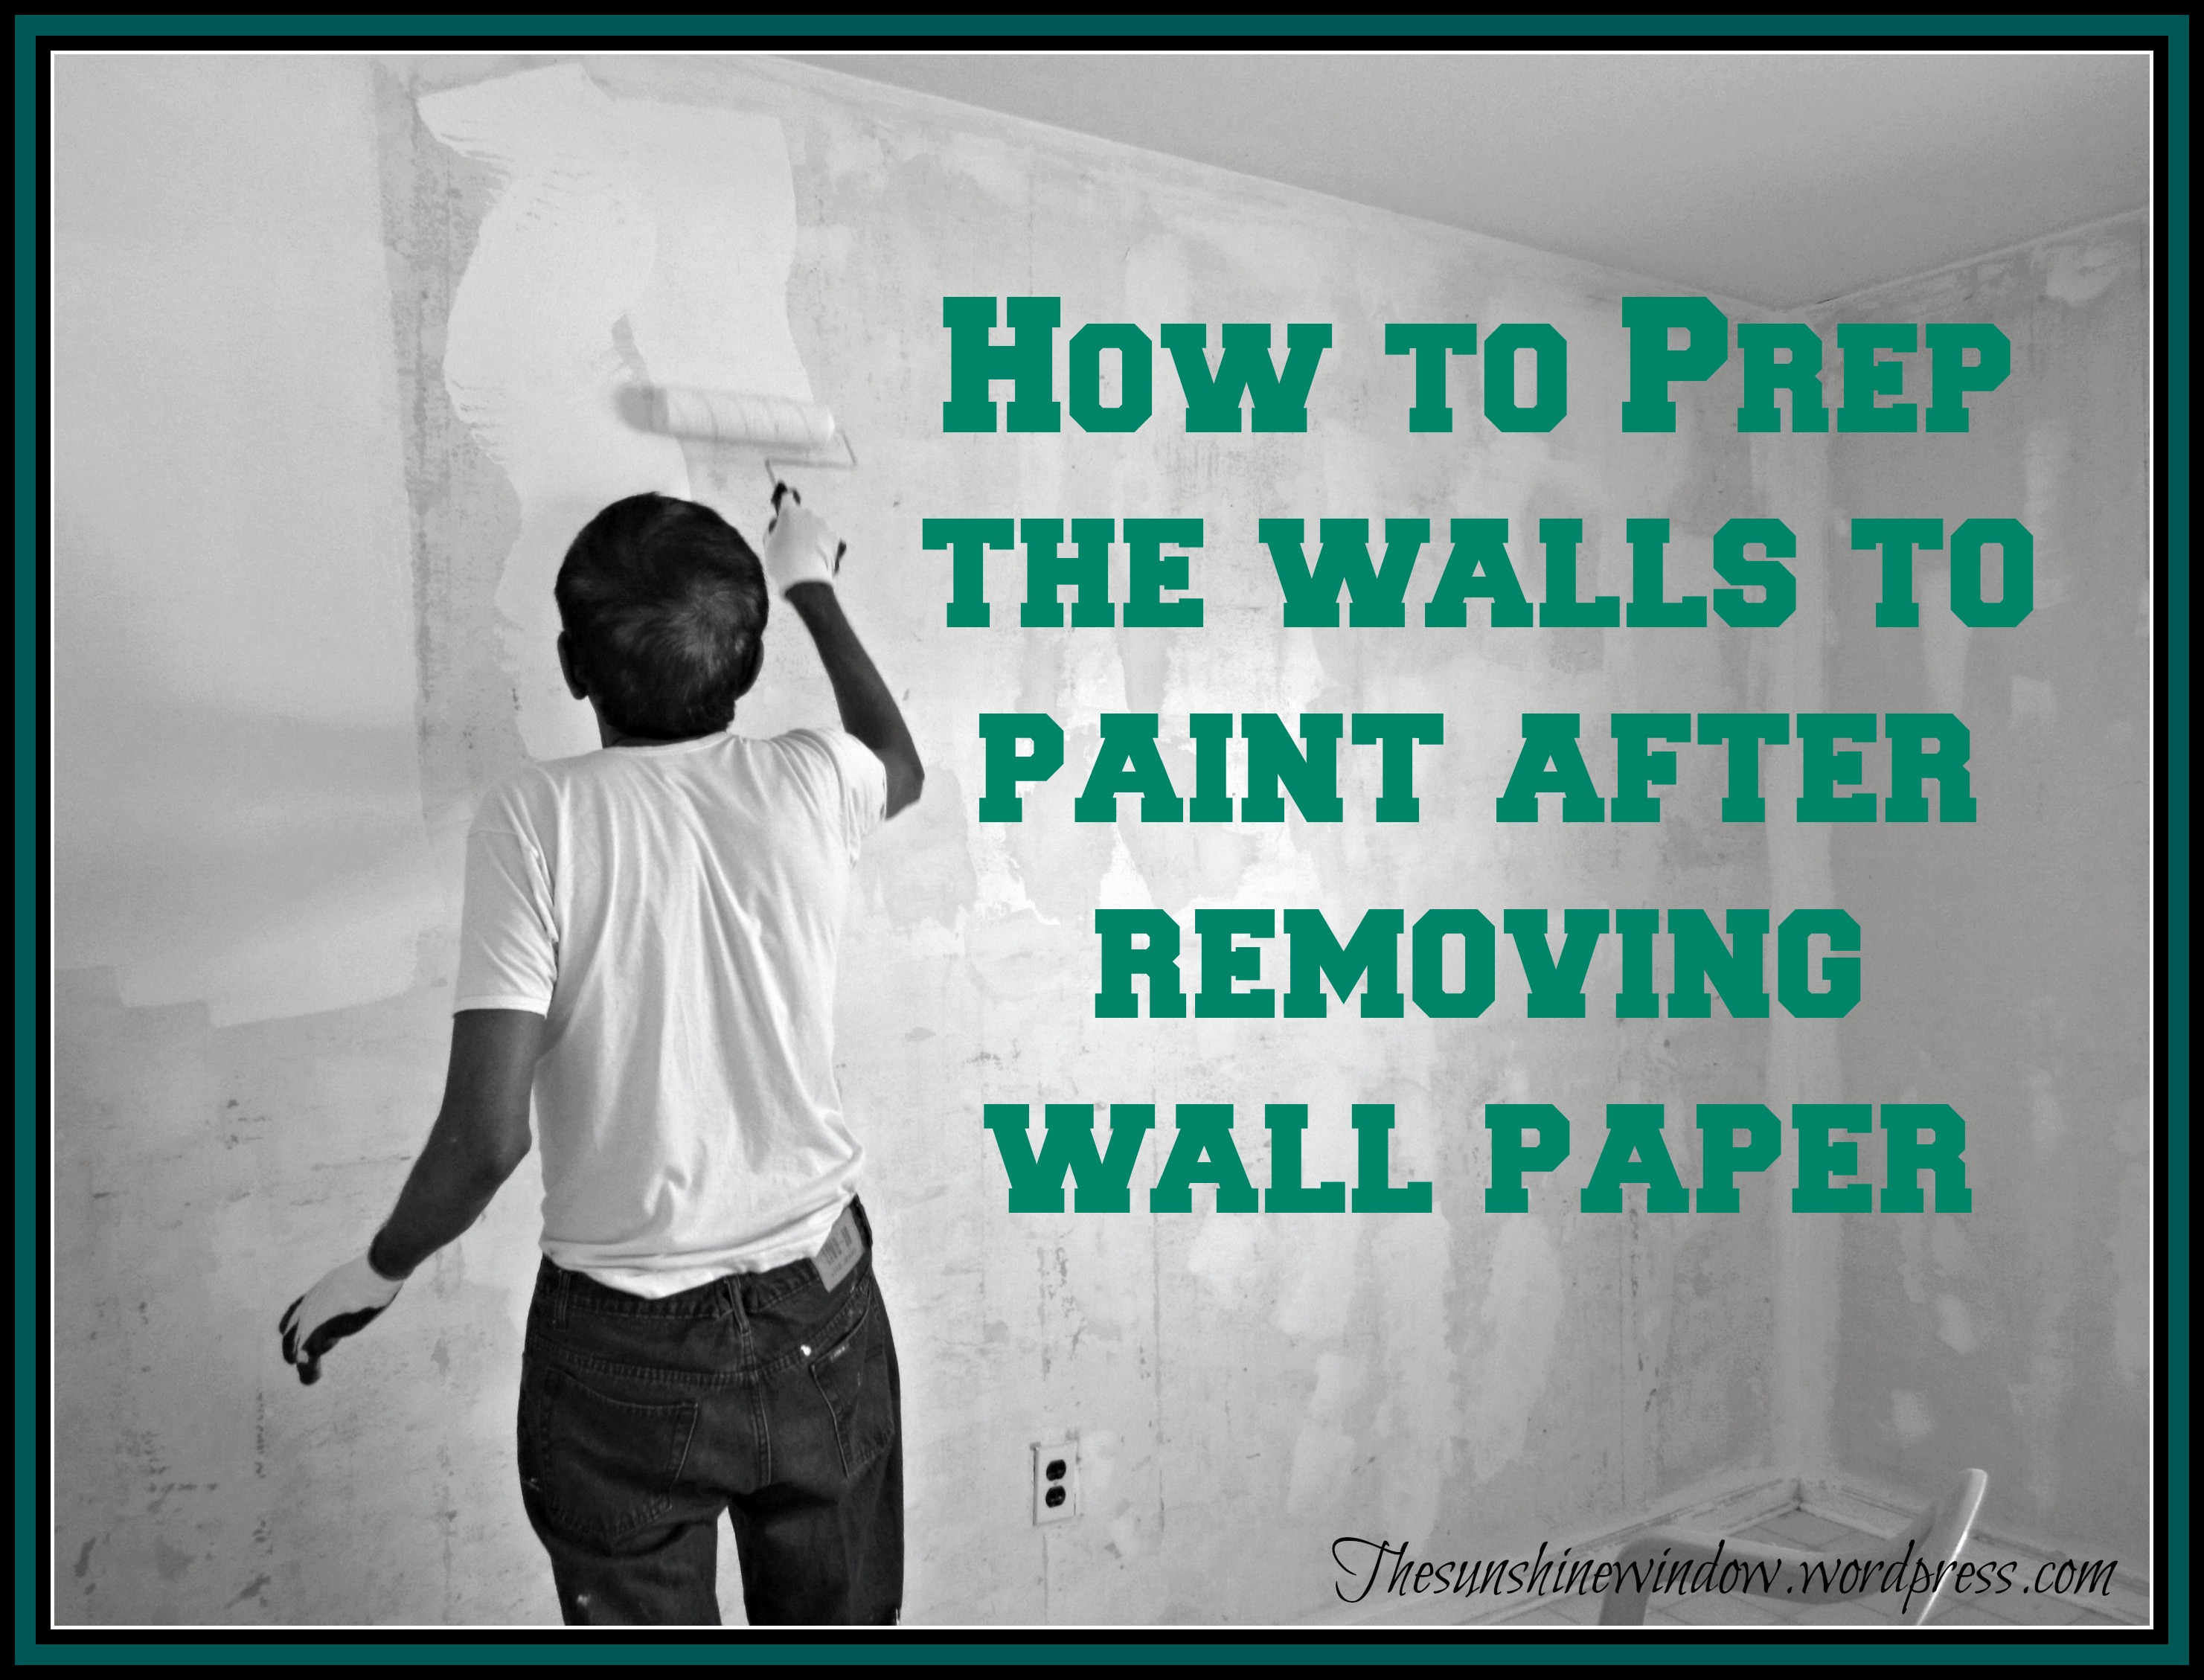 50 Prepping Walls After Removing Wallpaper On Wallpapersafari